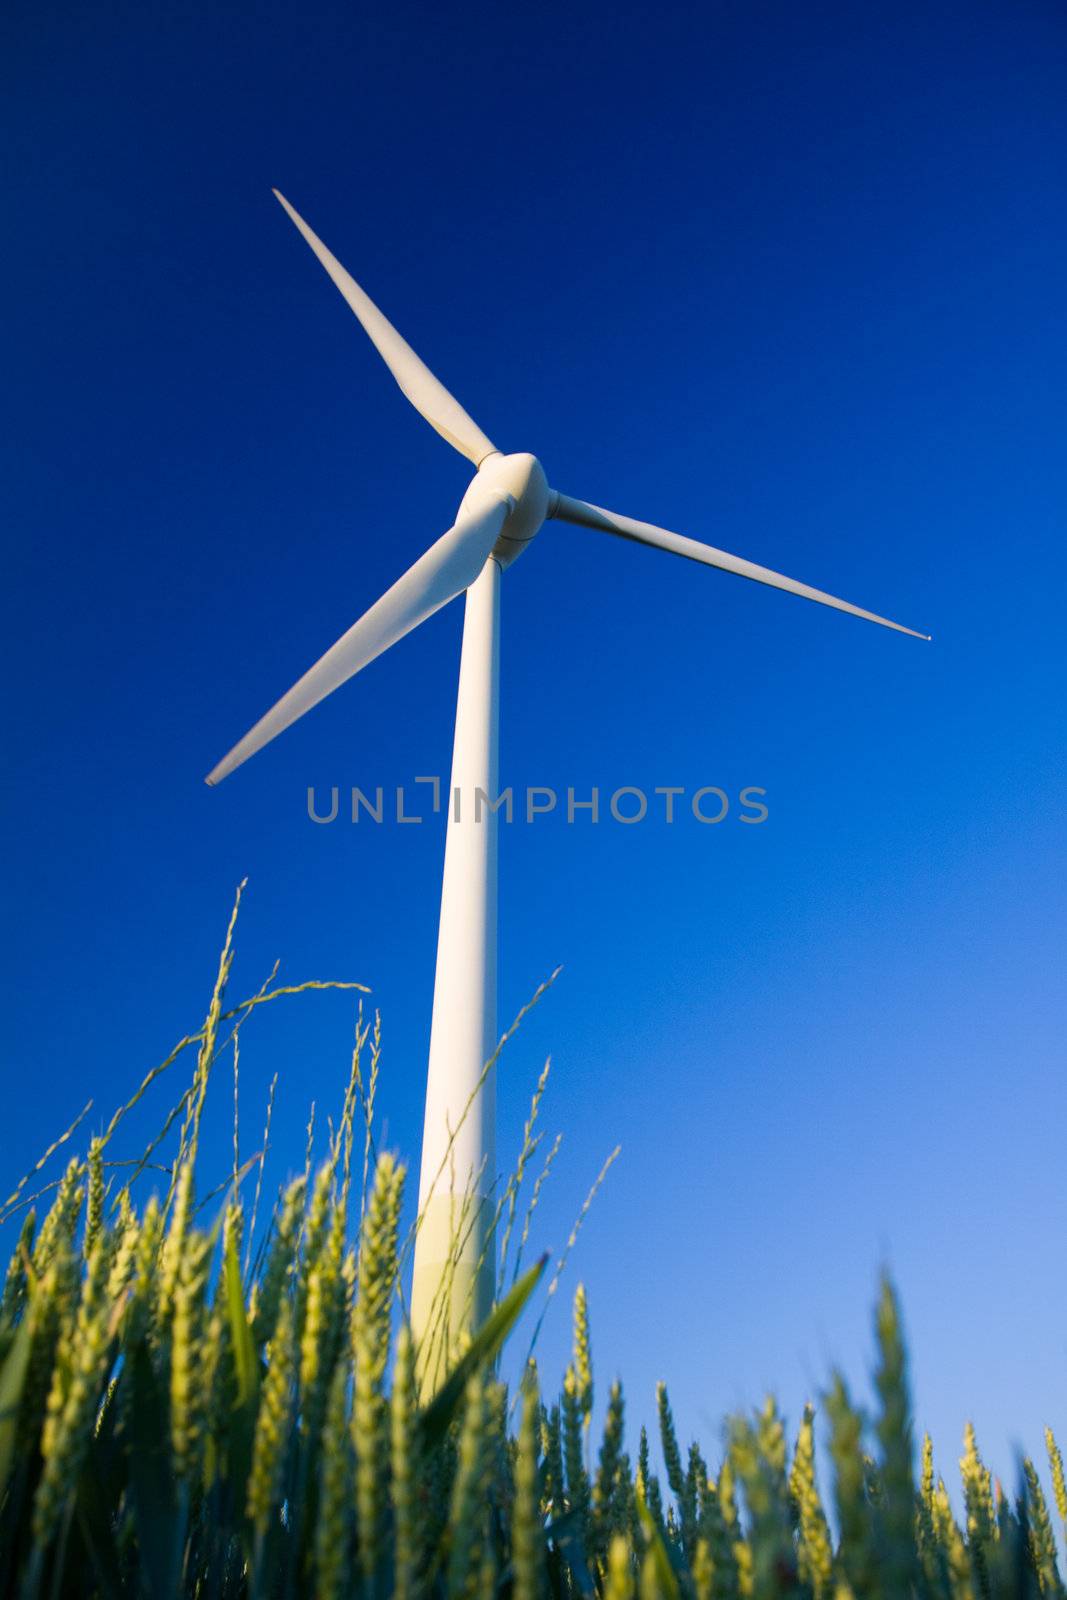 Windmill and crop by Gbuglok